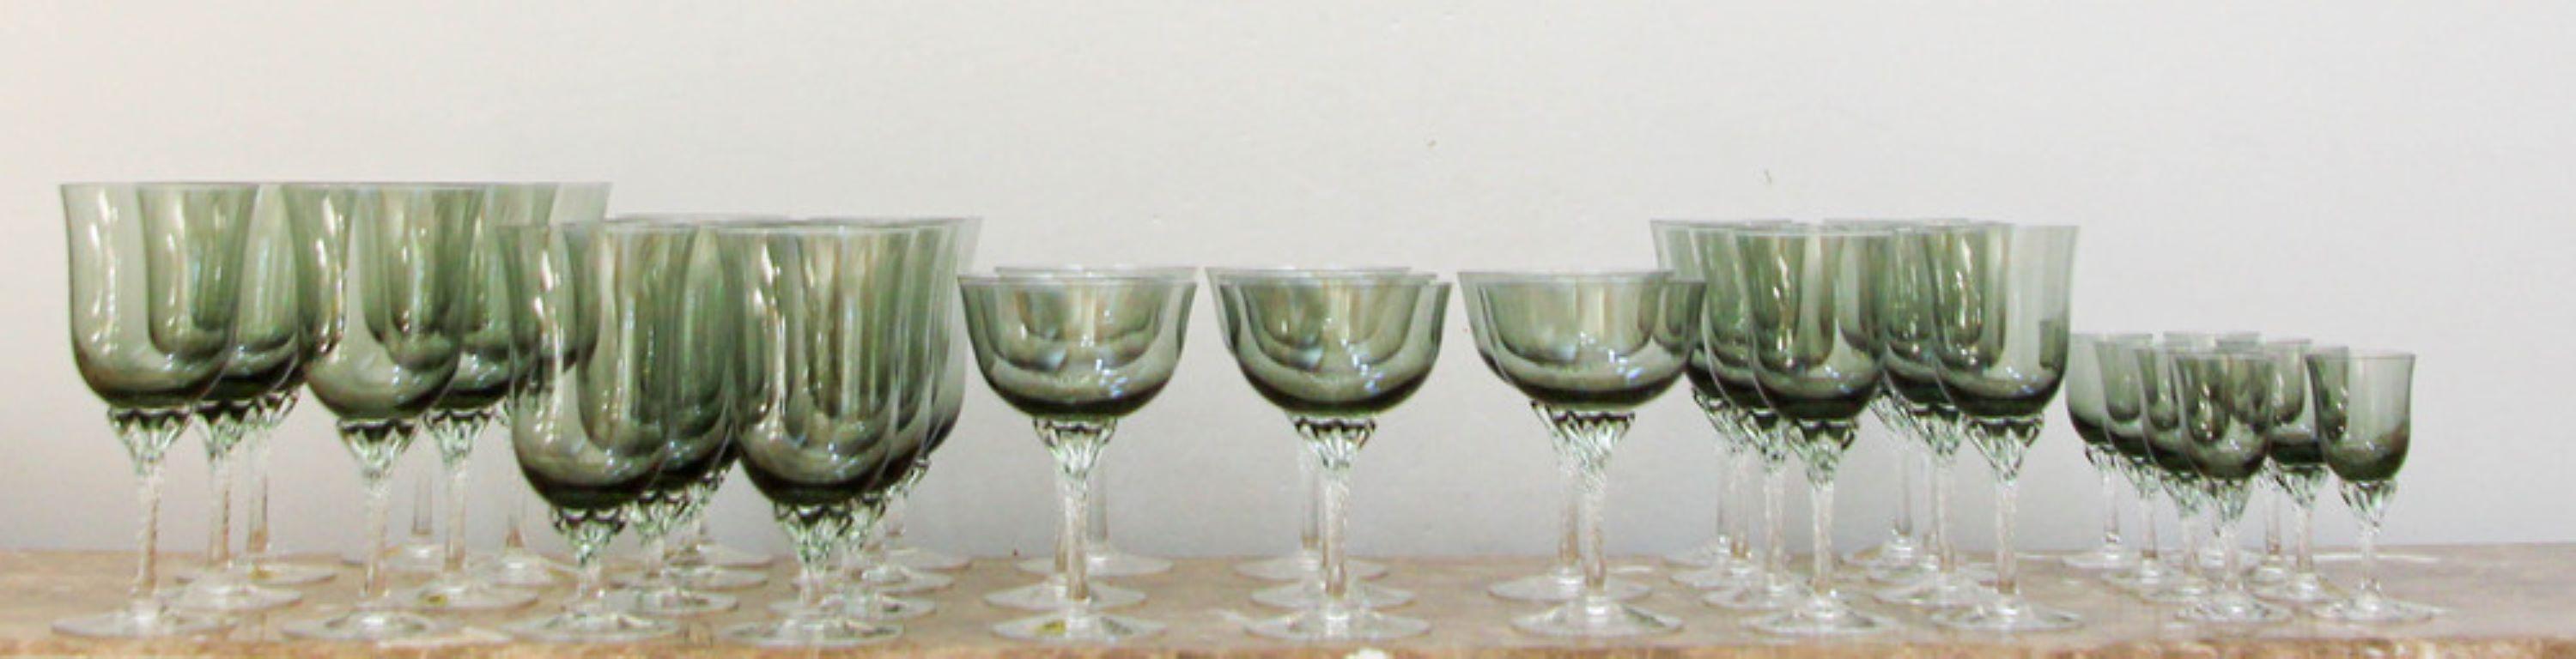 SASAKI large drinking crystal glasses smoke bowl twist stem set of 40 pieces.
1990s Jade light green smoke color 